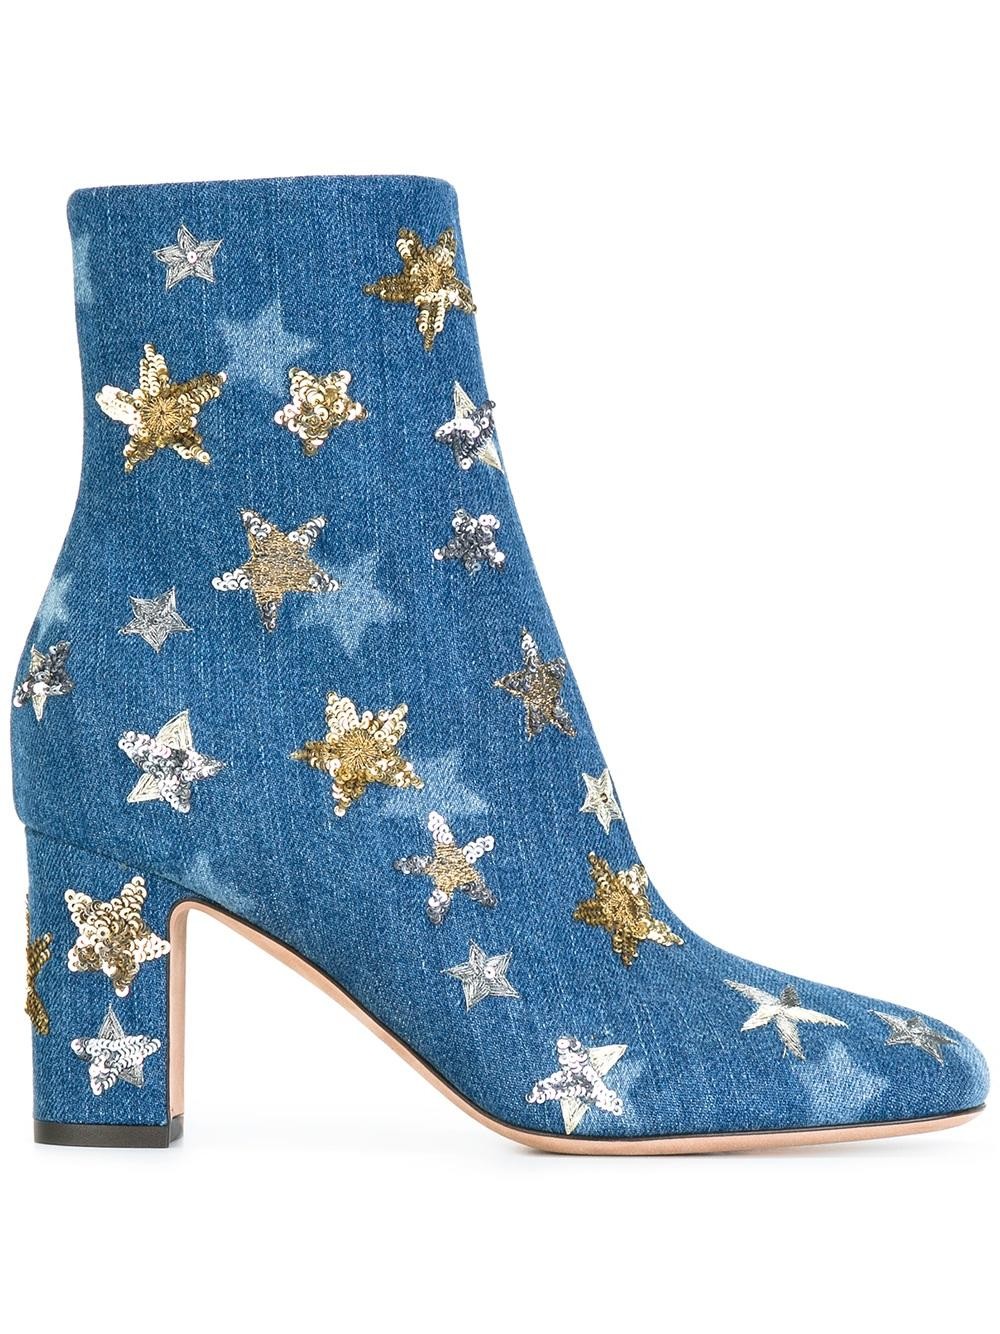 Valentino Garavani Star Embroidered Denim Ankle Boots | ModeSens